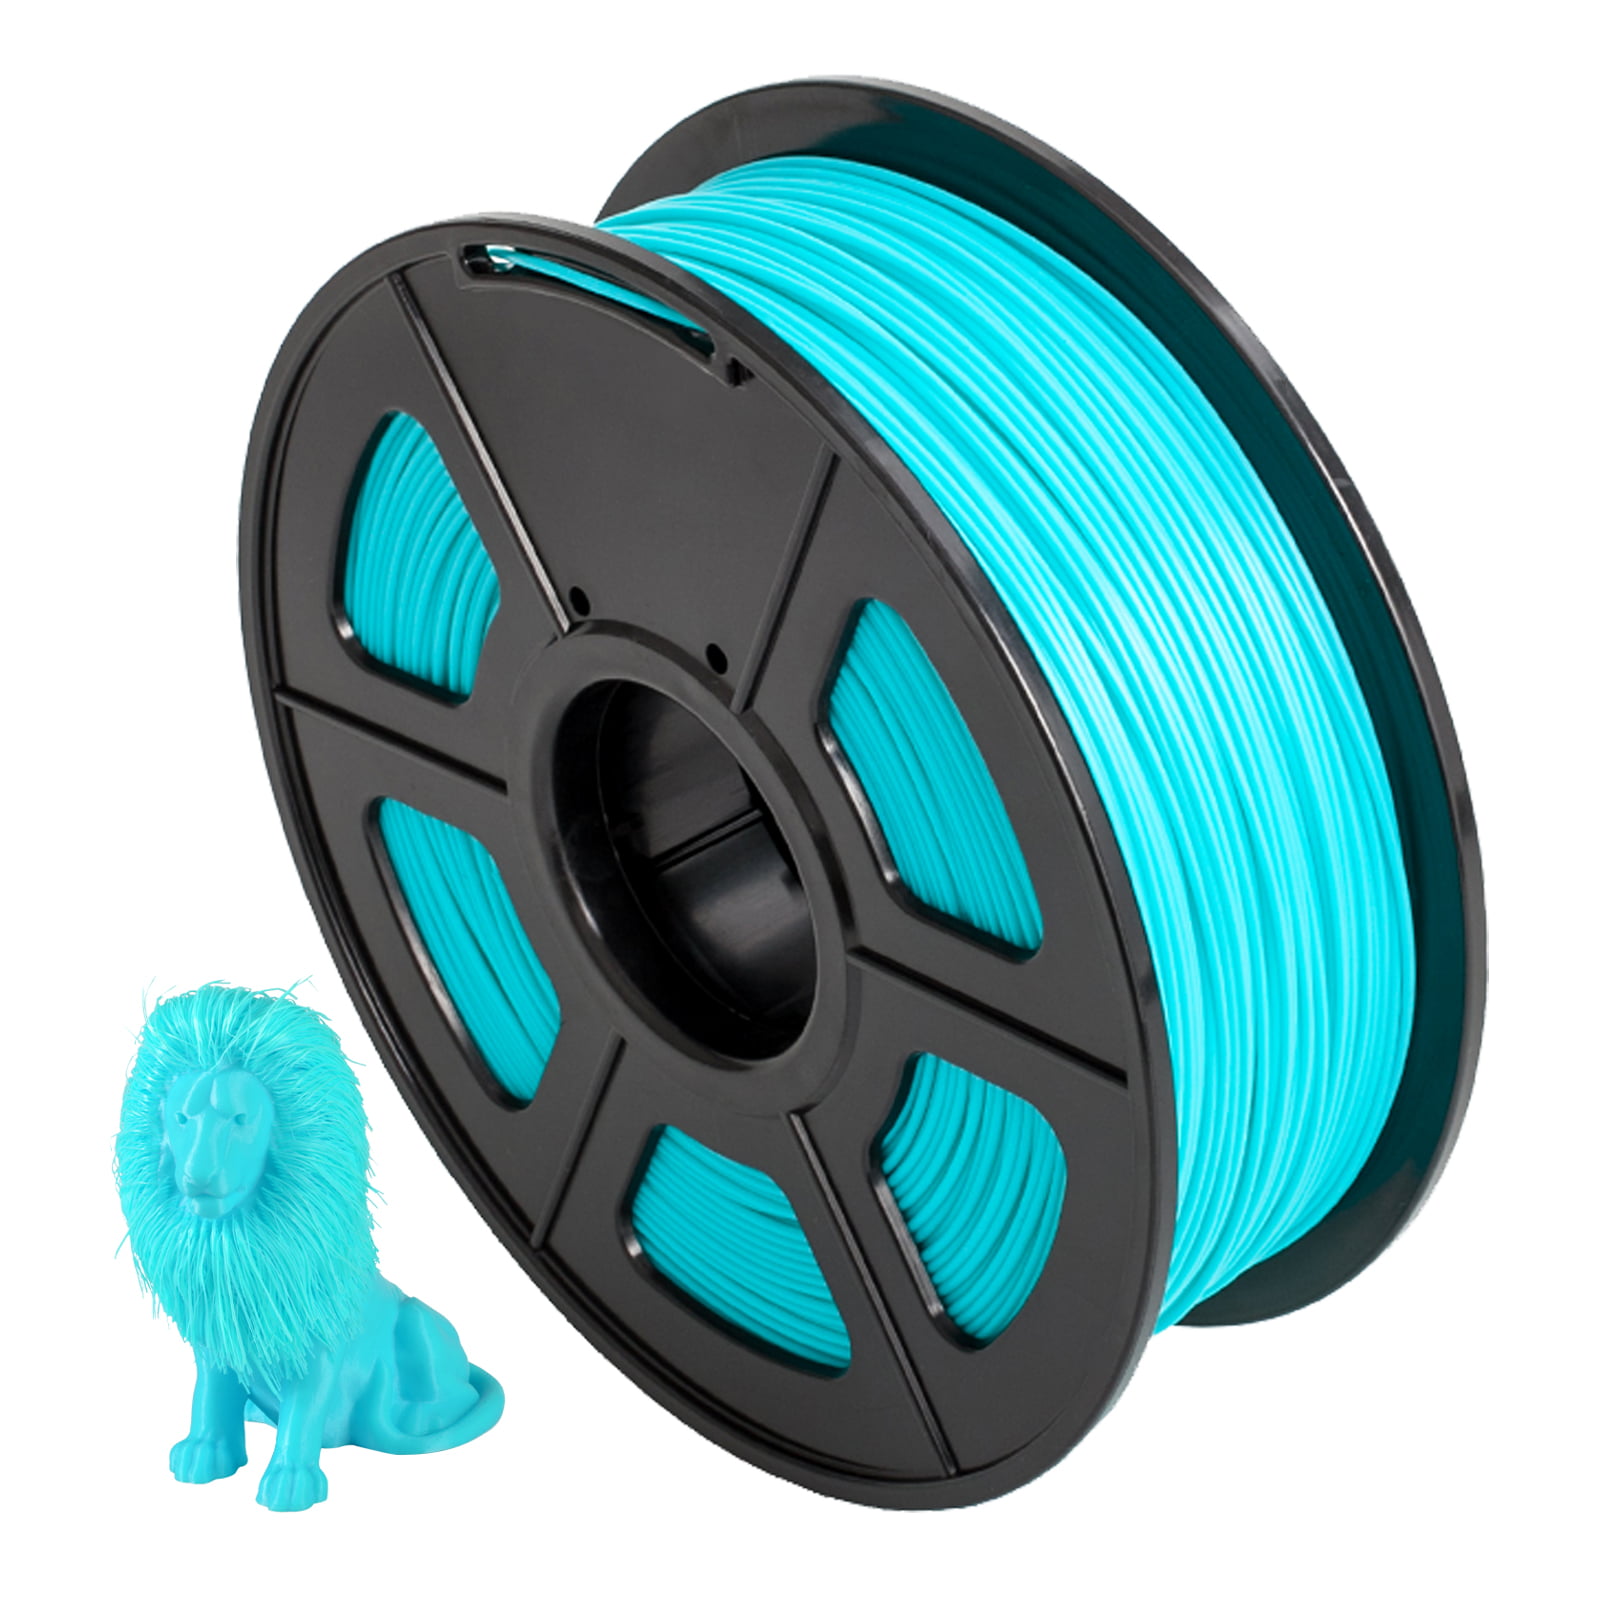 0.02mm PETG Filament,3D Printer Filament,GIANTARM PETG Filament 1.75mm,Dimensional Accuracy / 1kg,Blue